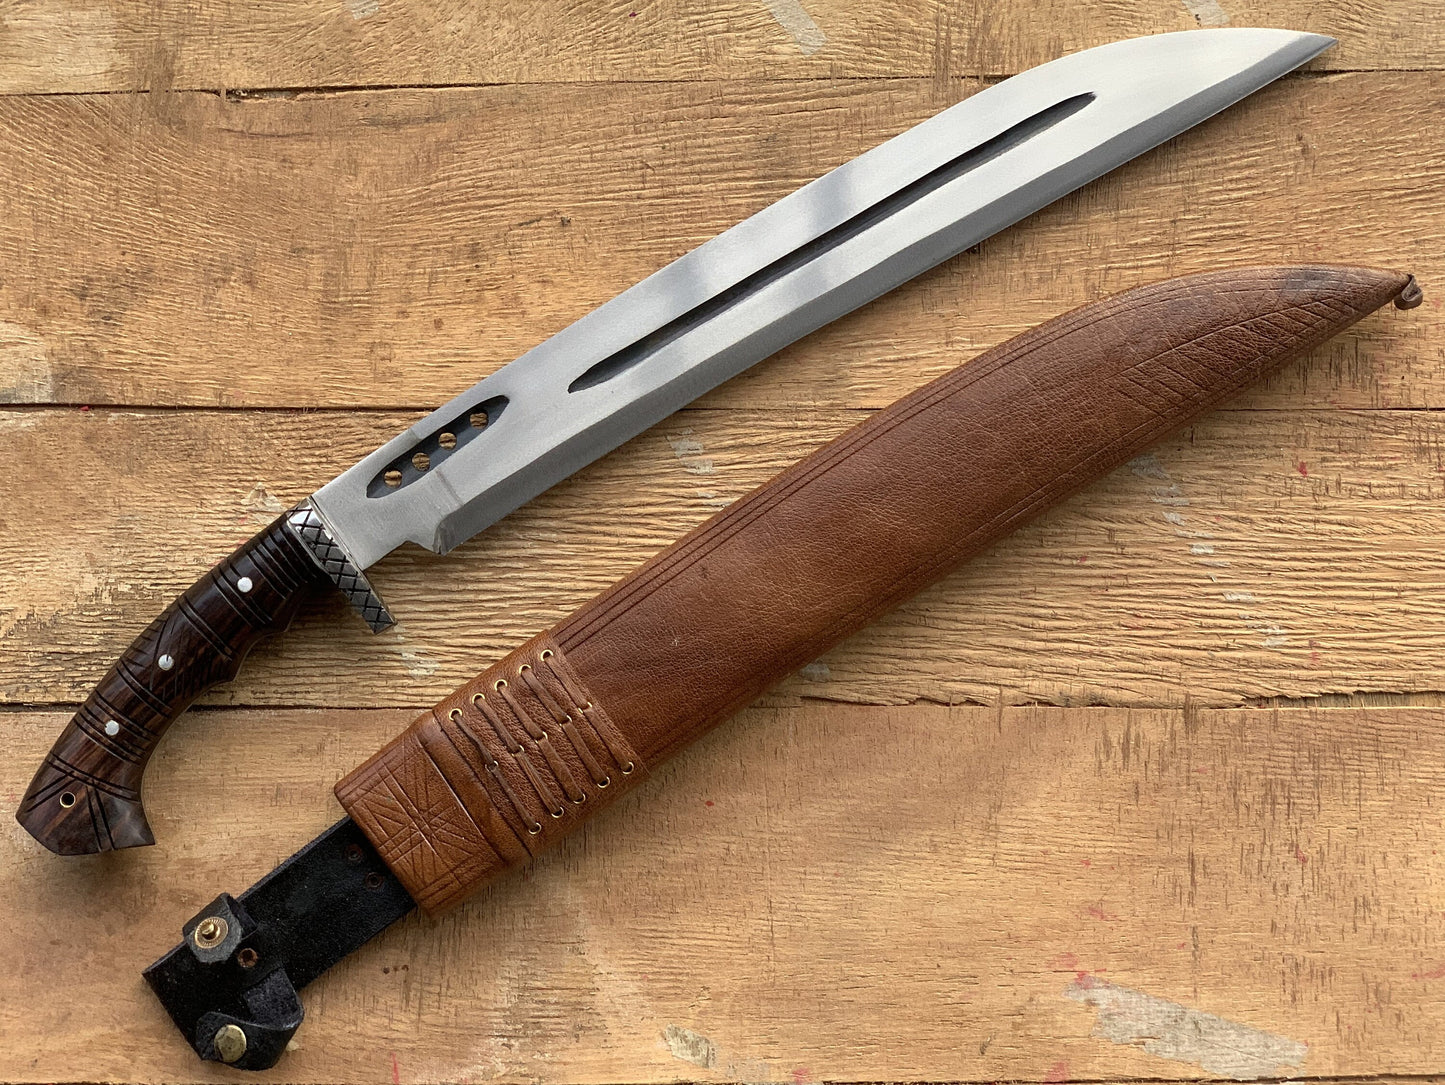 Gurkha Nepal, Hand- Forged 18” Blade SAEX Knife Full Tang High Temper, Sharp Khukuri with Leather Sheath